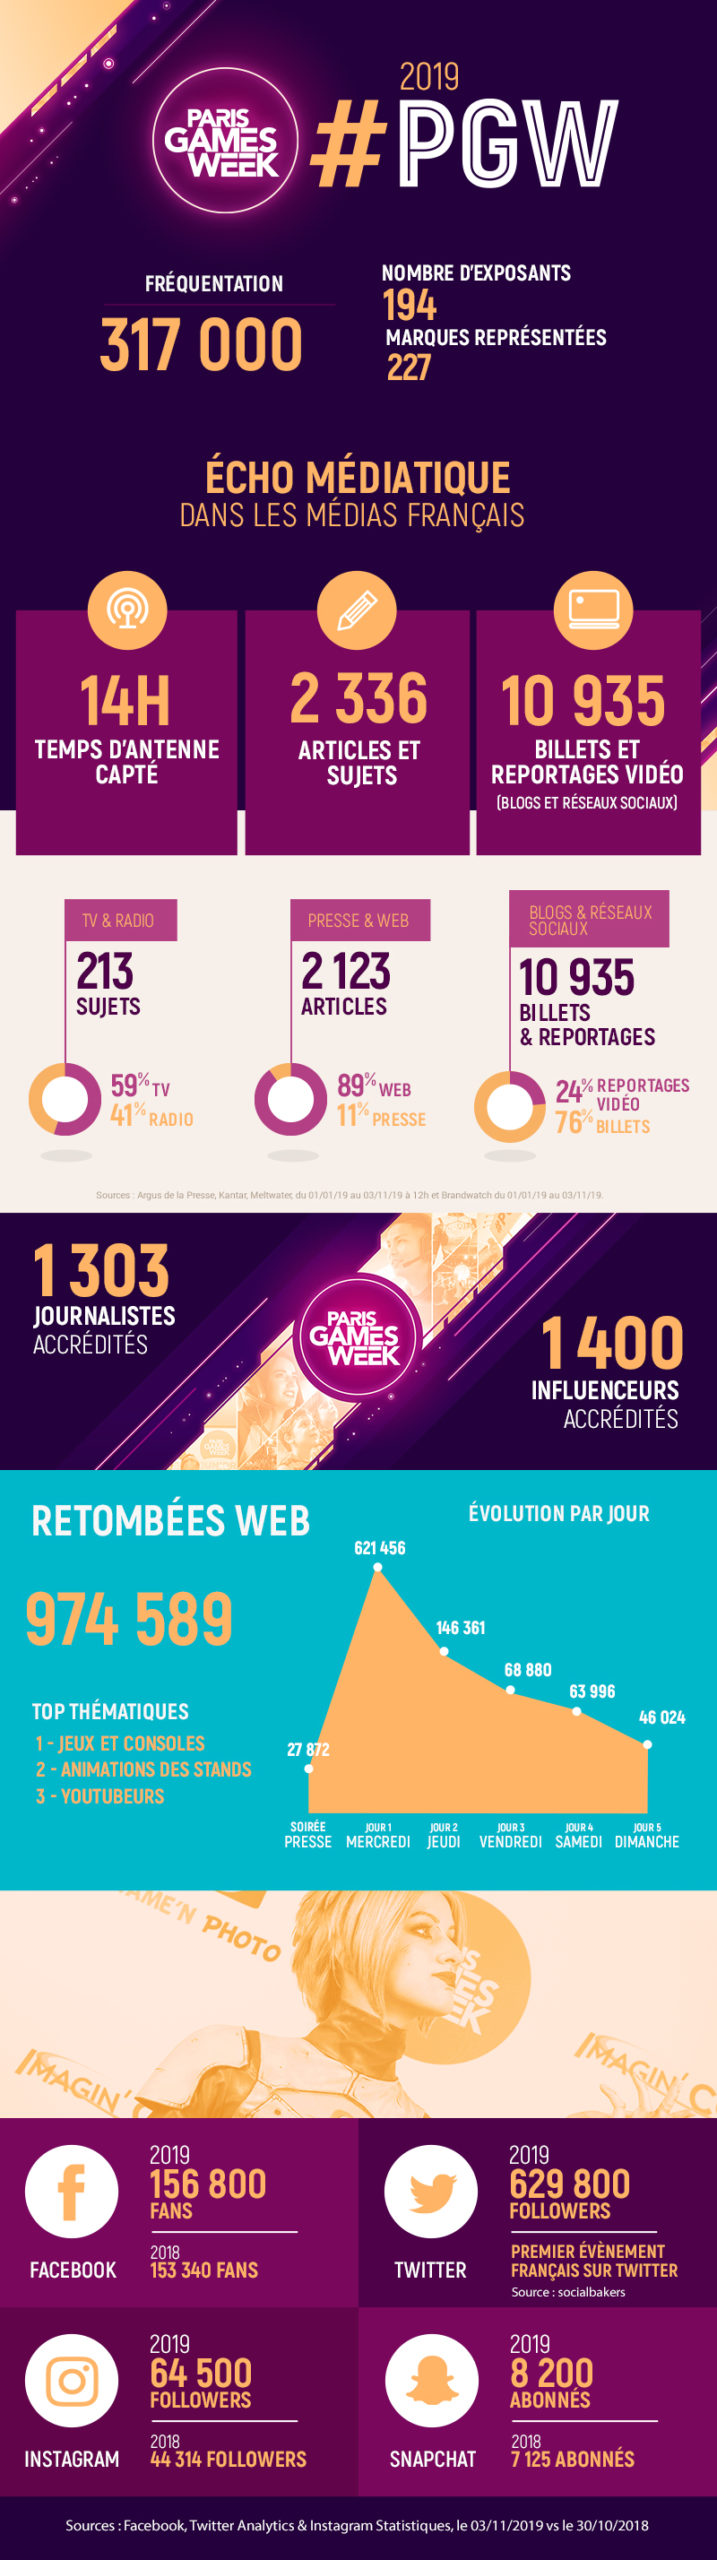 Infographie Paris Games Week 2019